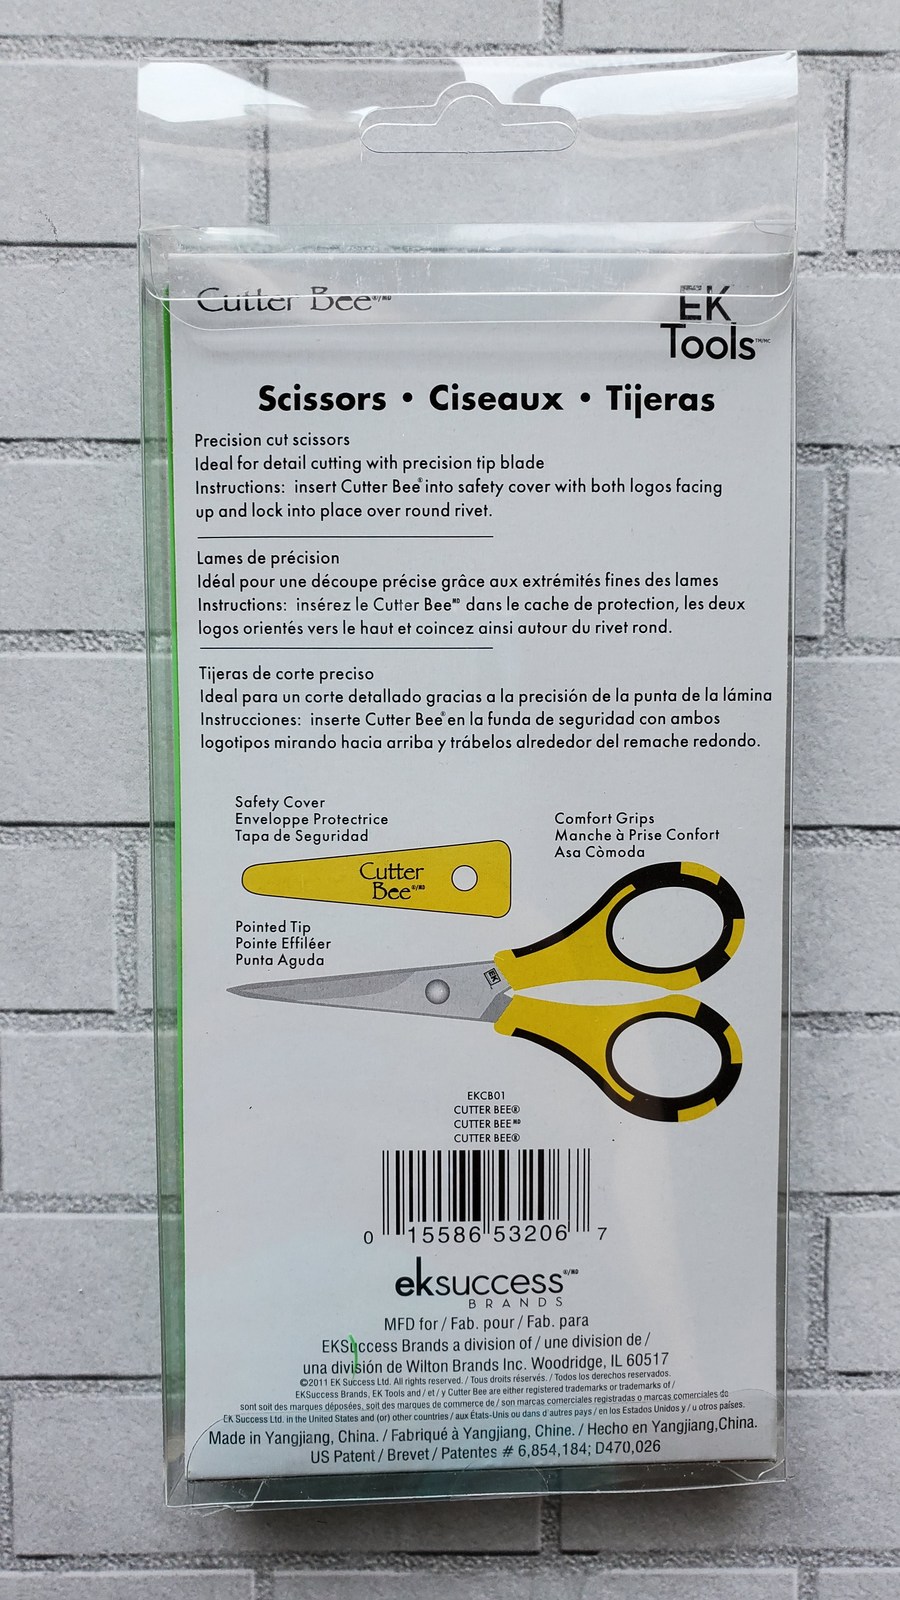 EK Success - Cutter Bee Scissors - 015586532067